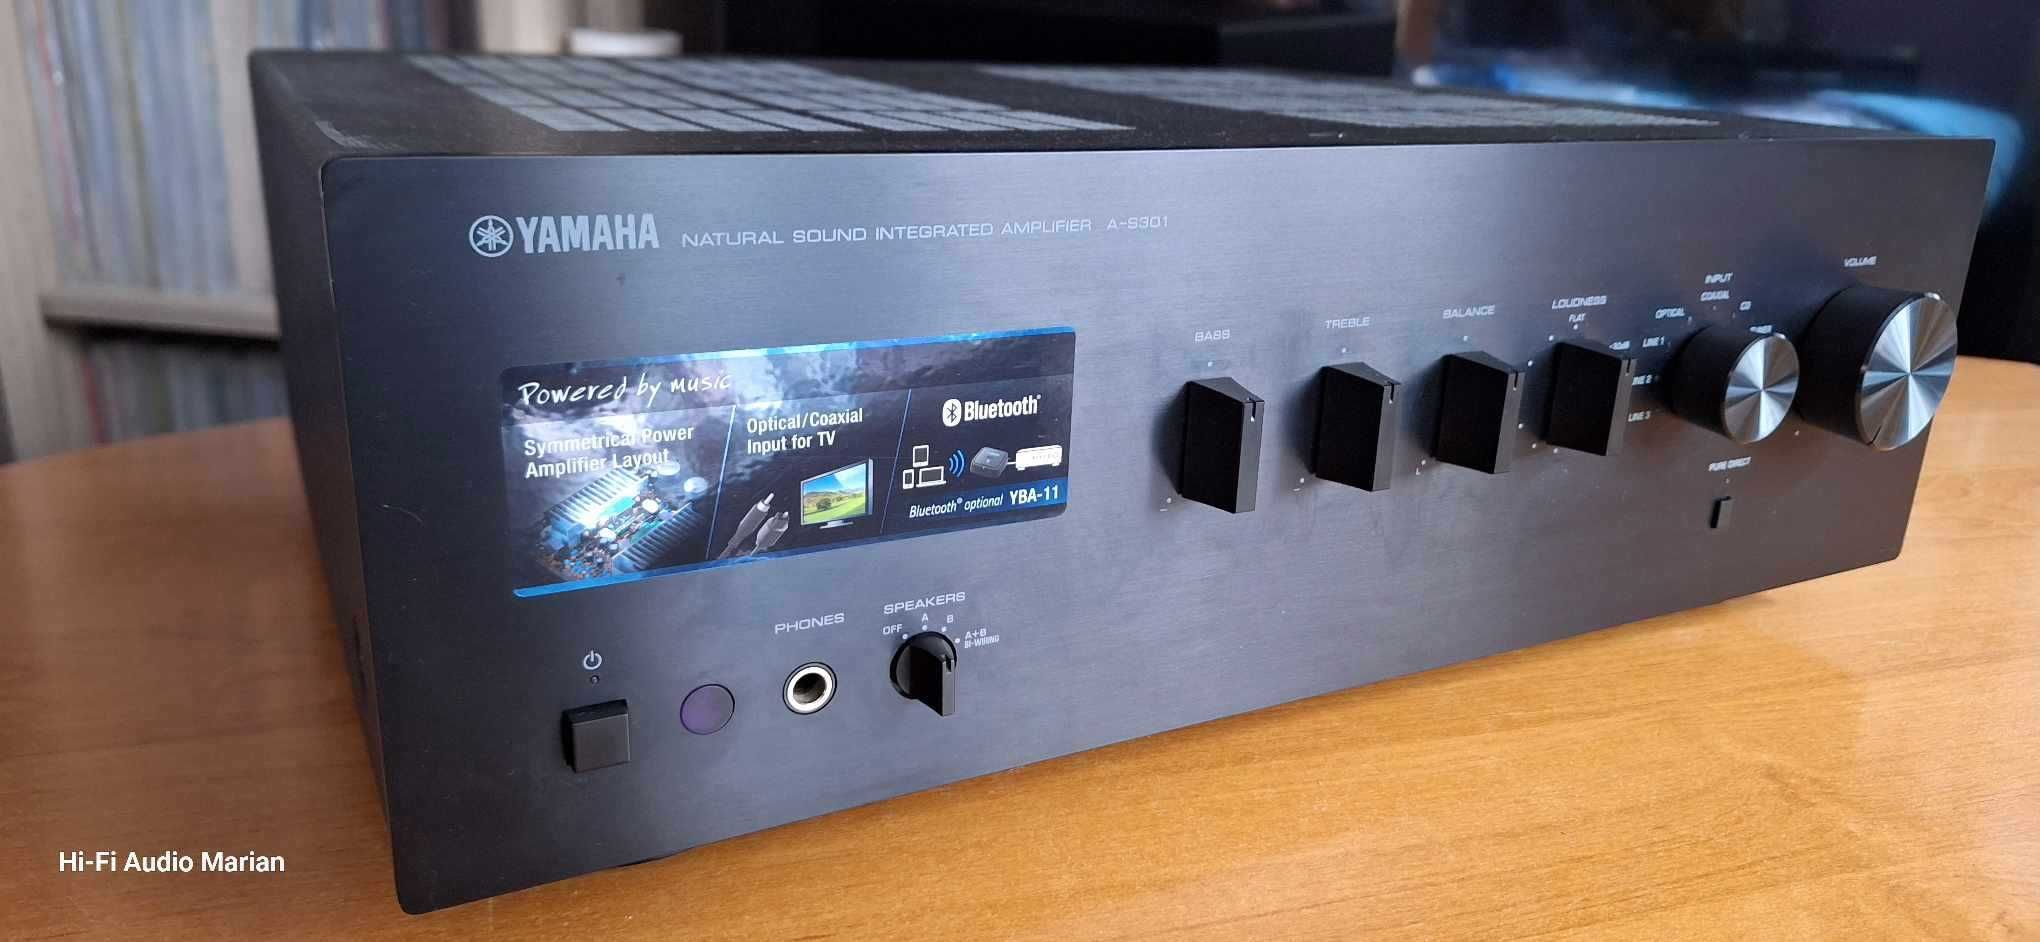 Amplificator Yamaha A-S301 ( Se vinde ca DEFECT )